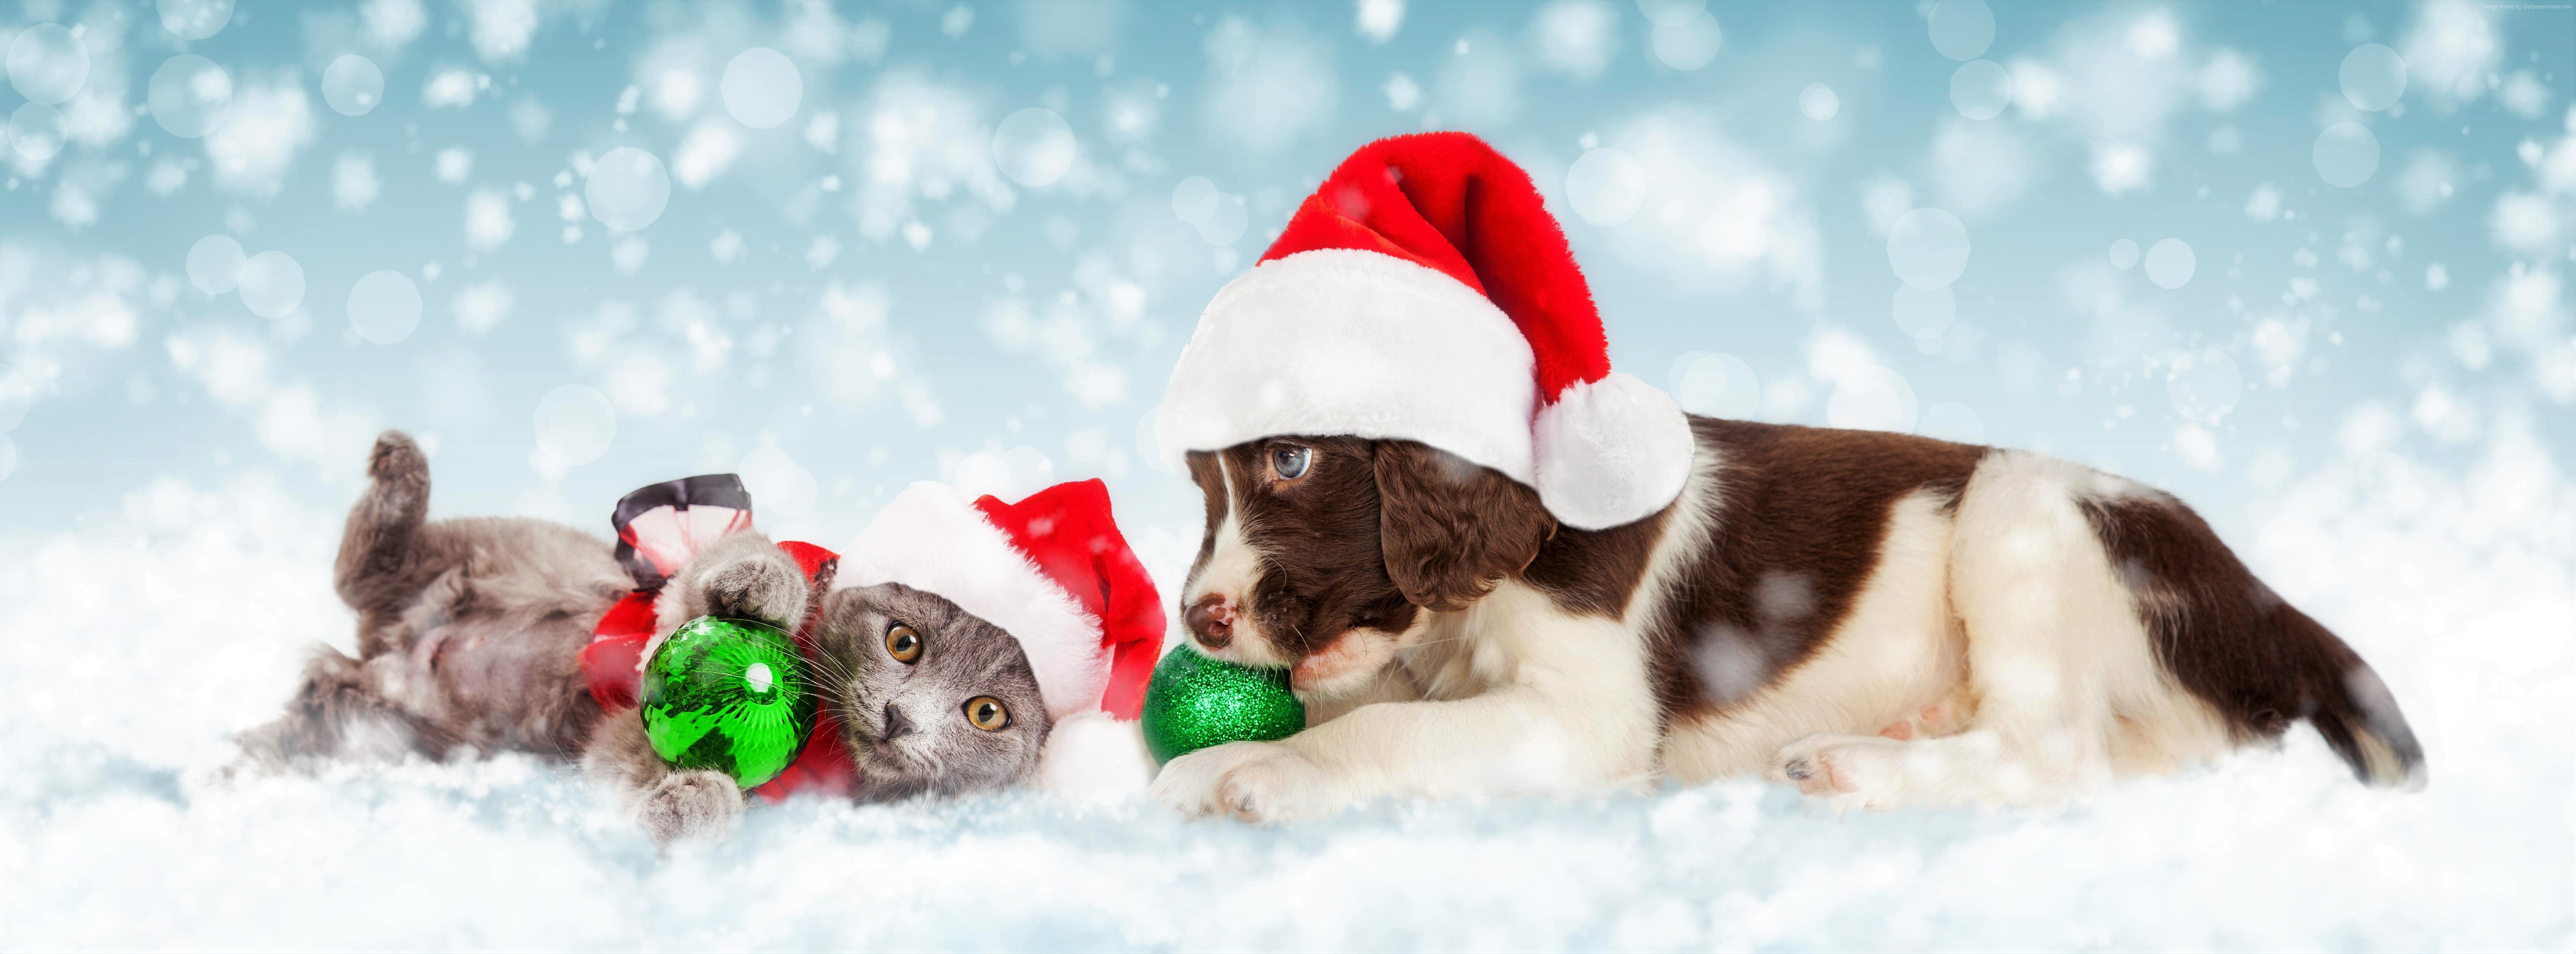 Christmas Cat Dog Kitten Puppy Santa Hat Christmas Ornaments Snow Snowfall Baby Animal 6723x2489